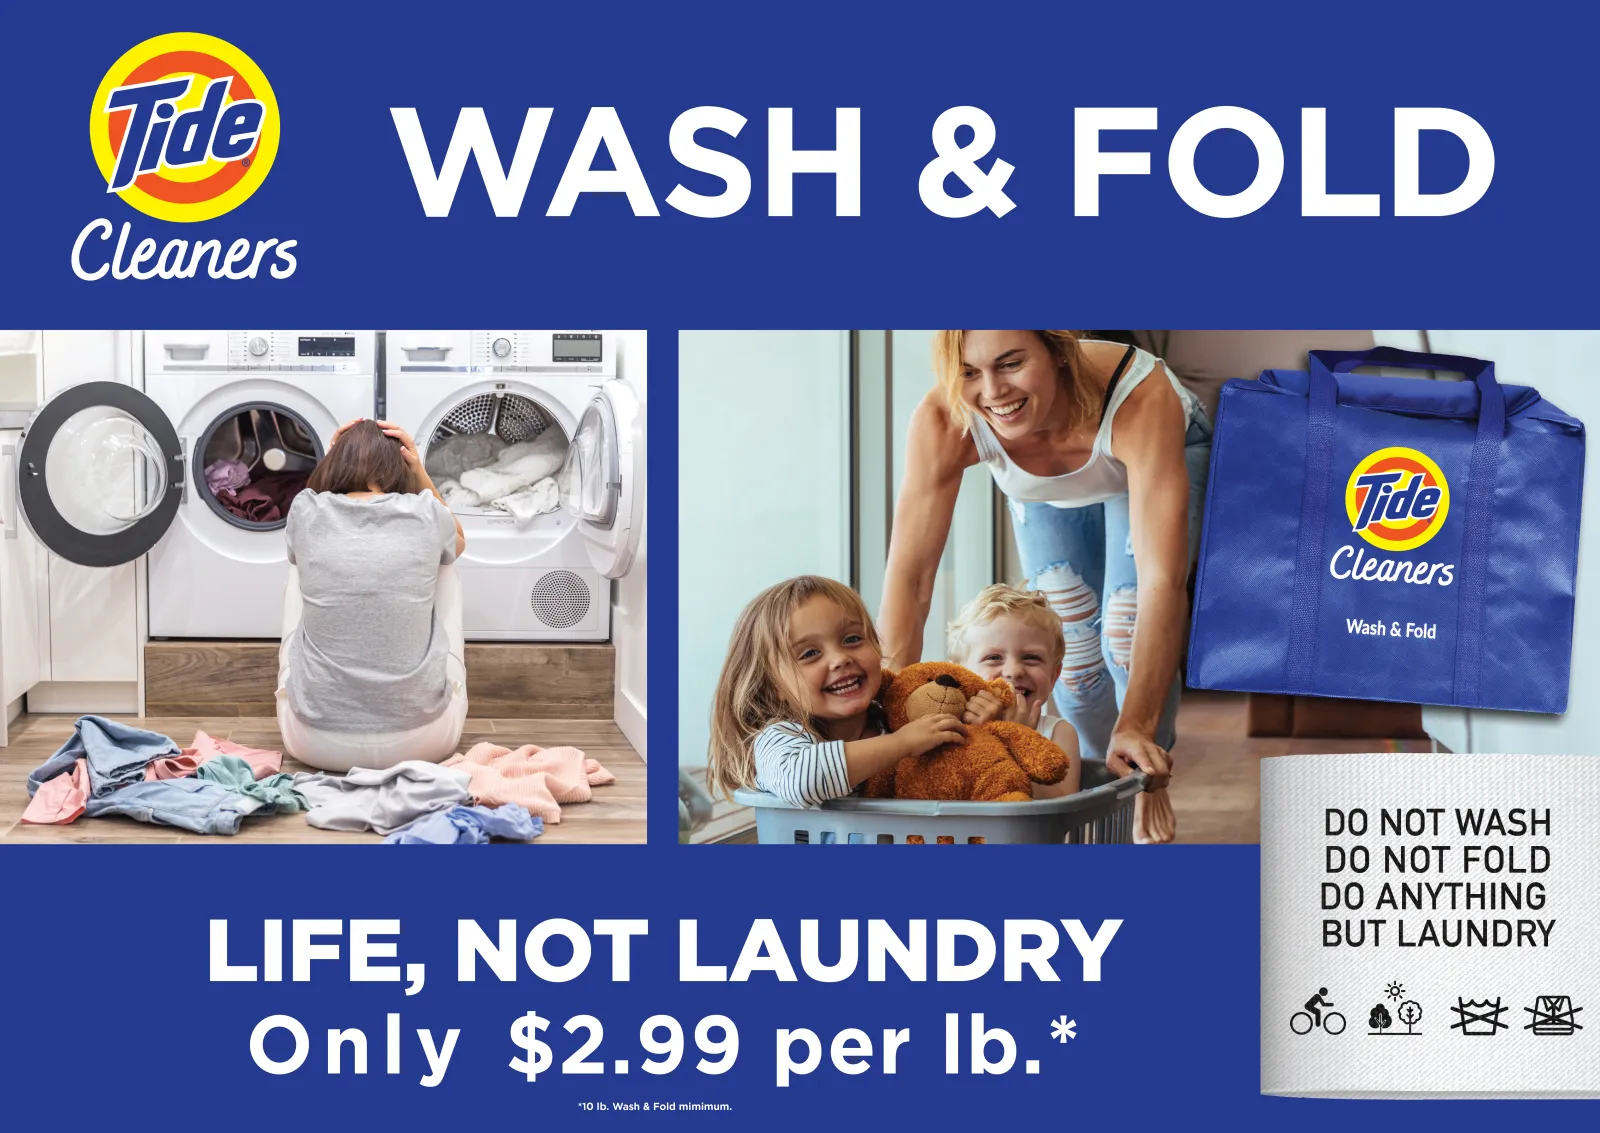 Tide Cleaners Wash and Fold Laundry Service Phoenix, Arizona